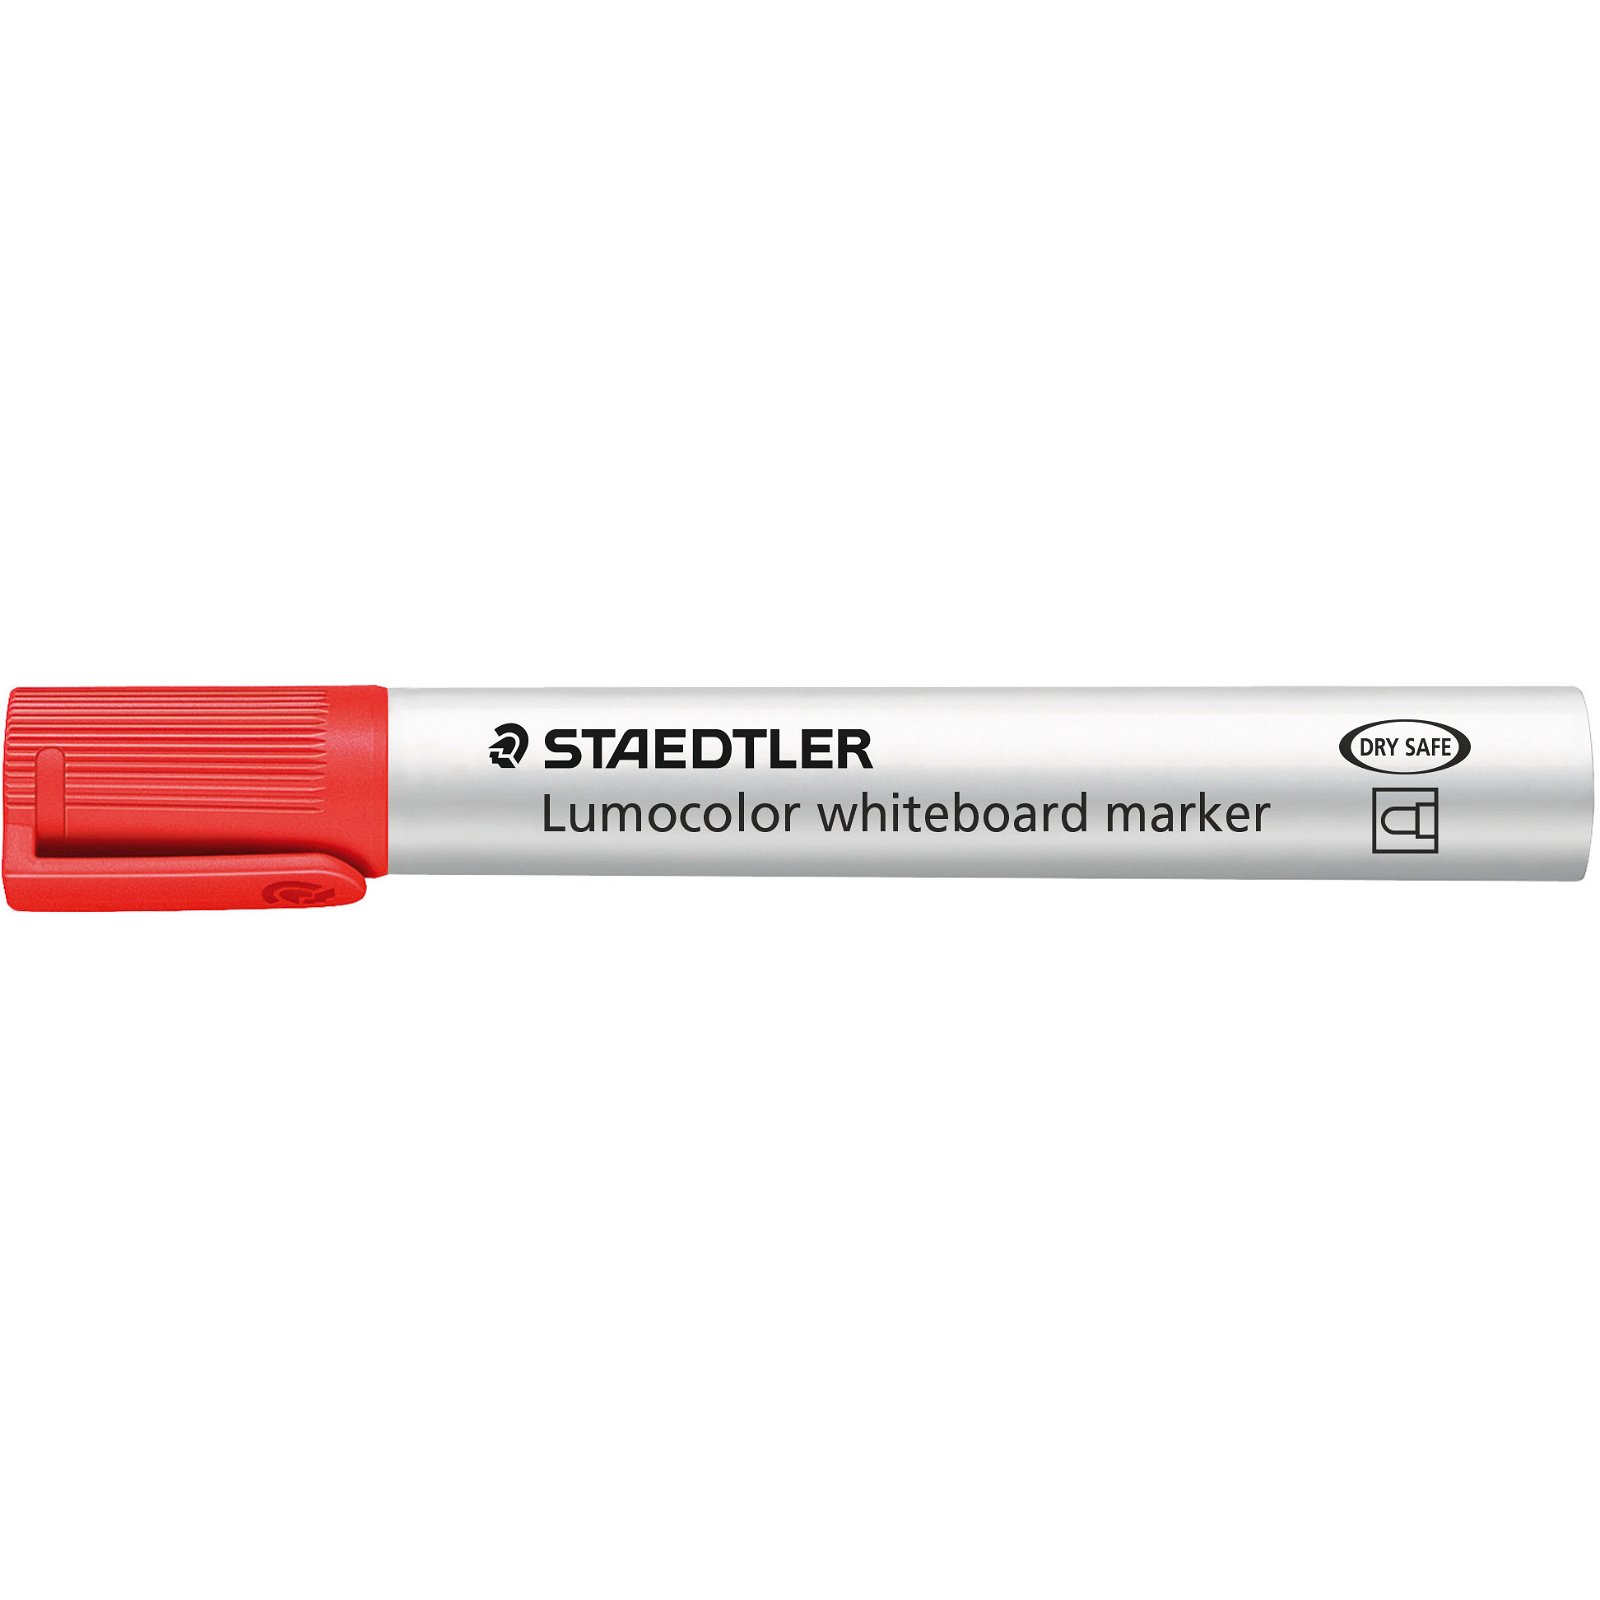 STAEDTLER Lumocolor 351 whiteboardmarker rod